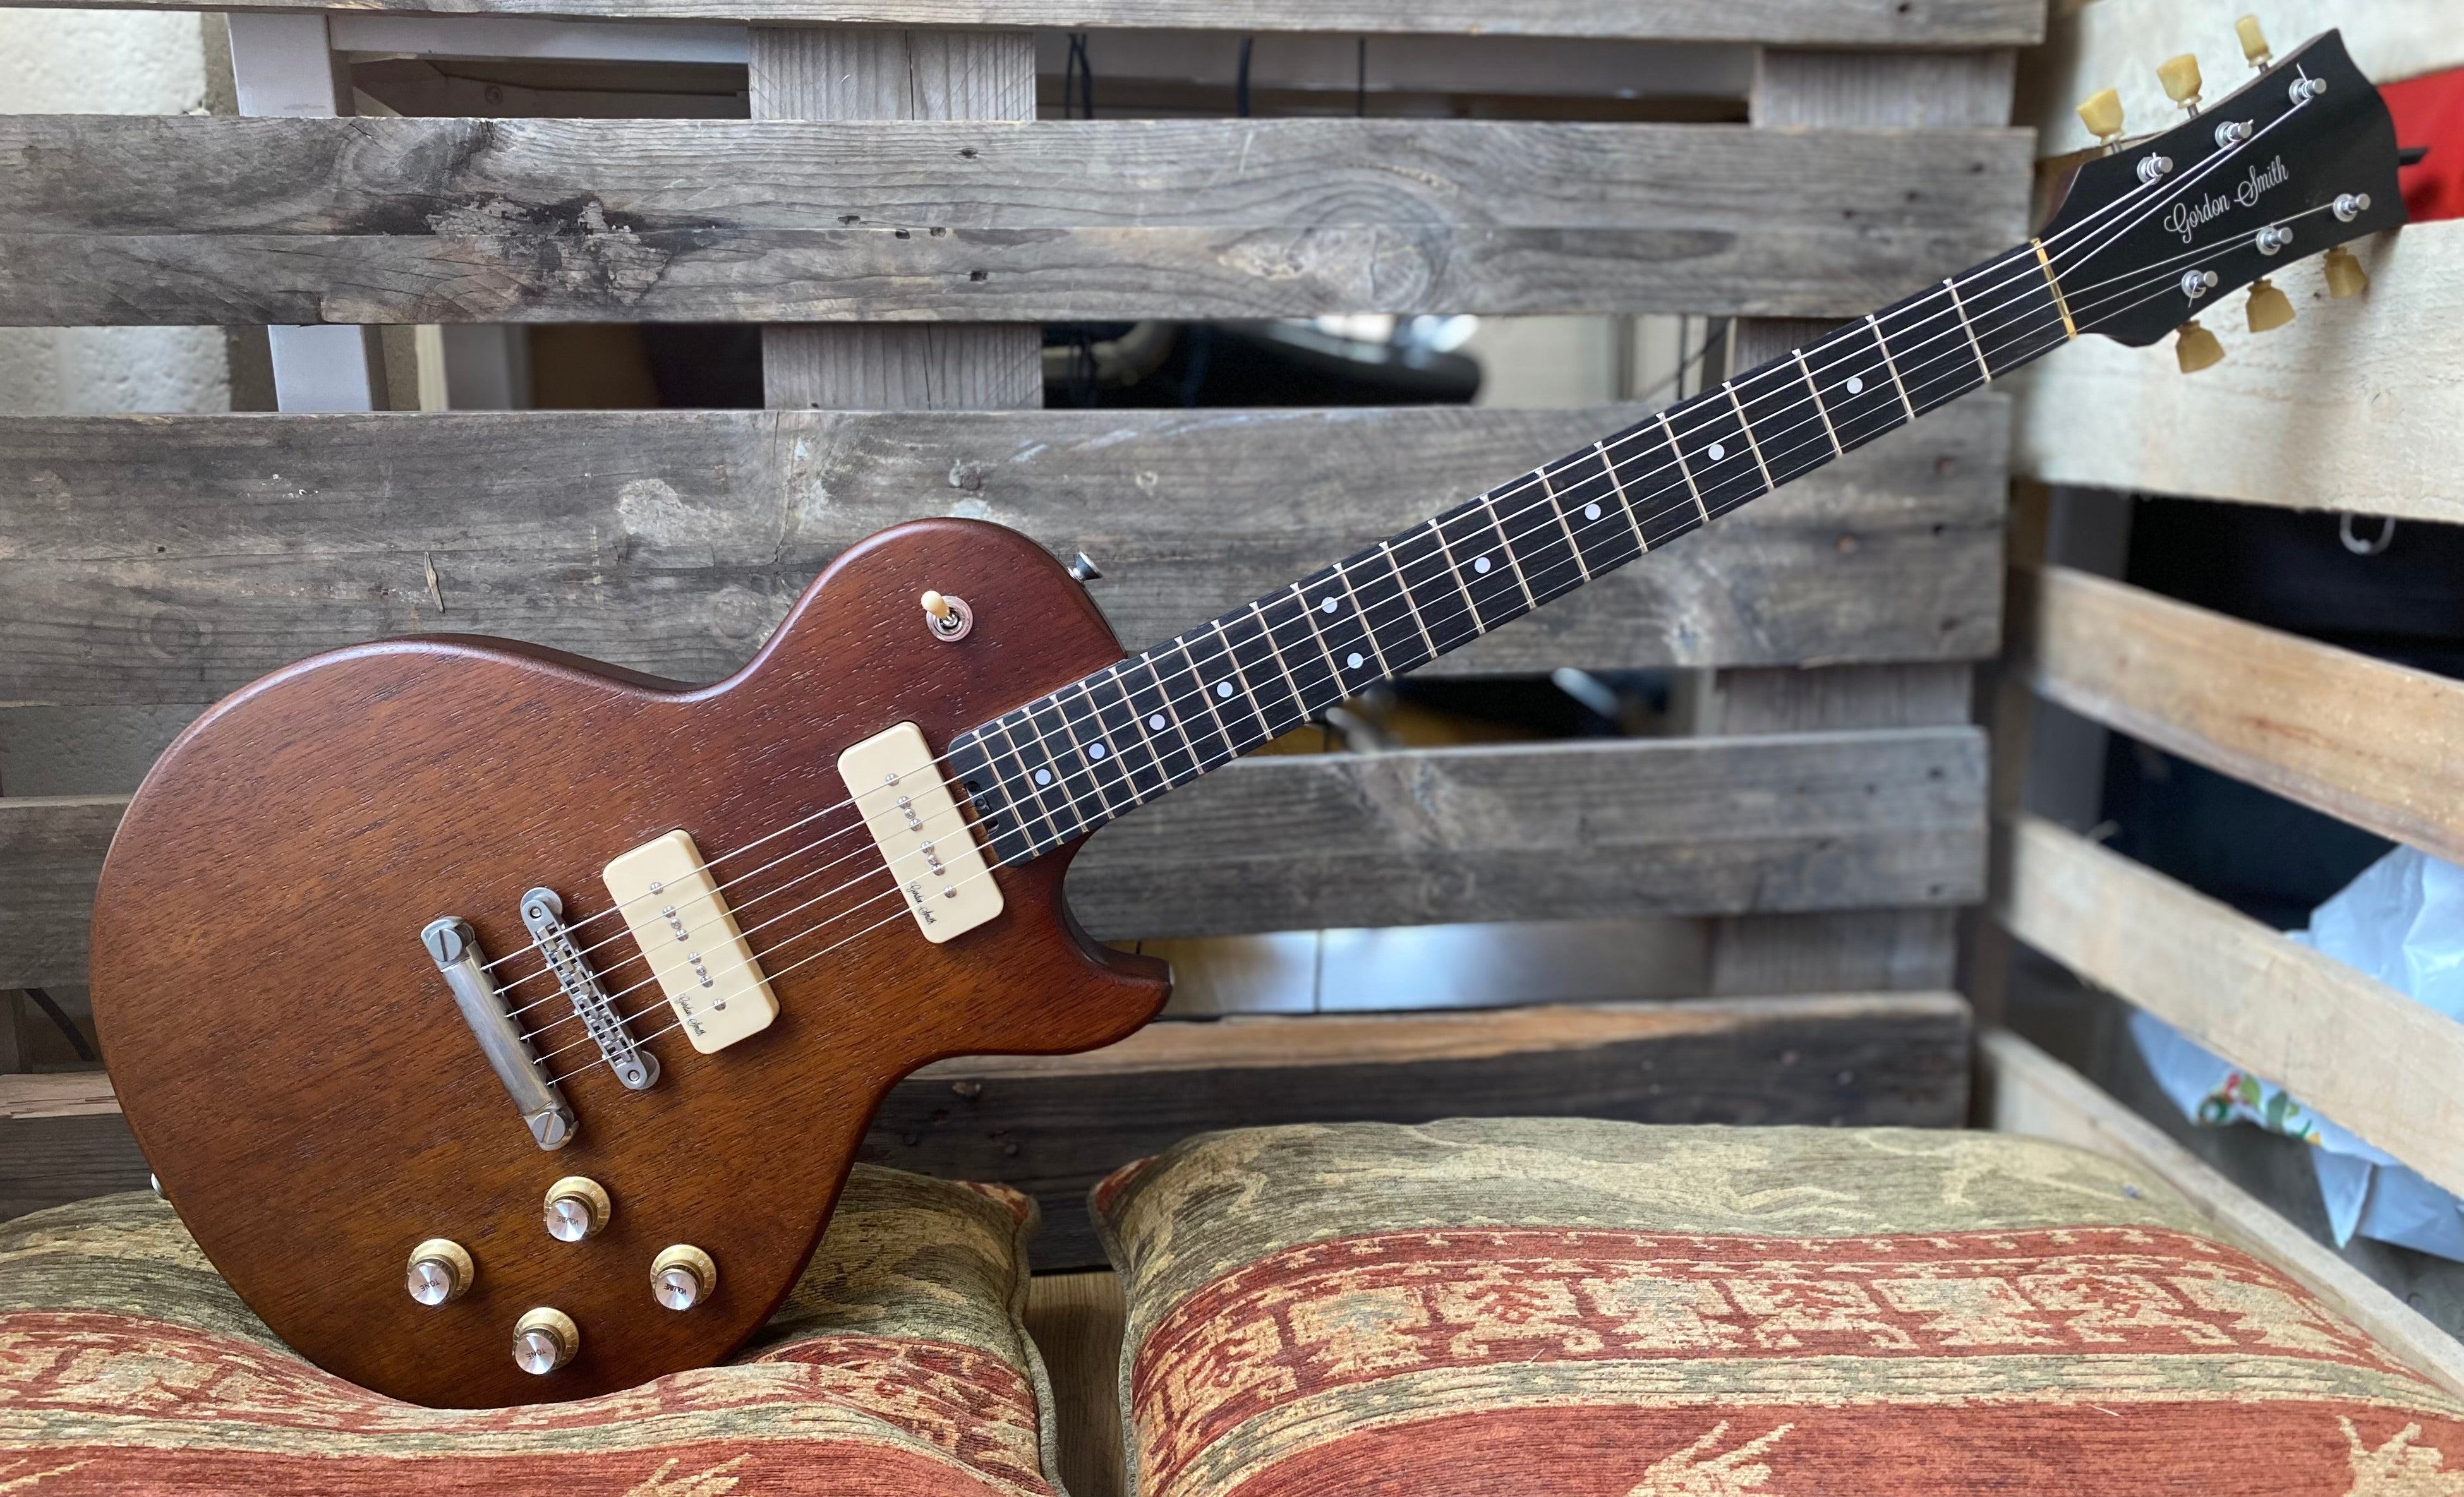 Gordon Smith GS2 Korina Open Pore Custom, Electric Guitar for sale at Richards Guitars.